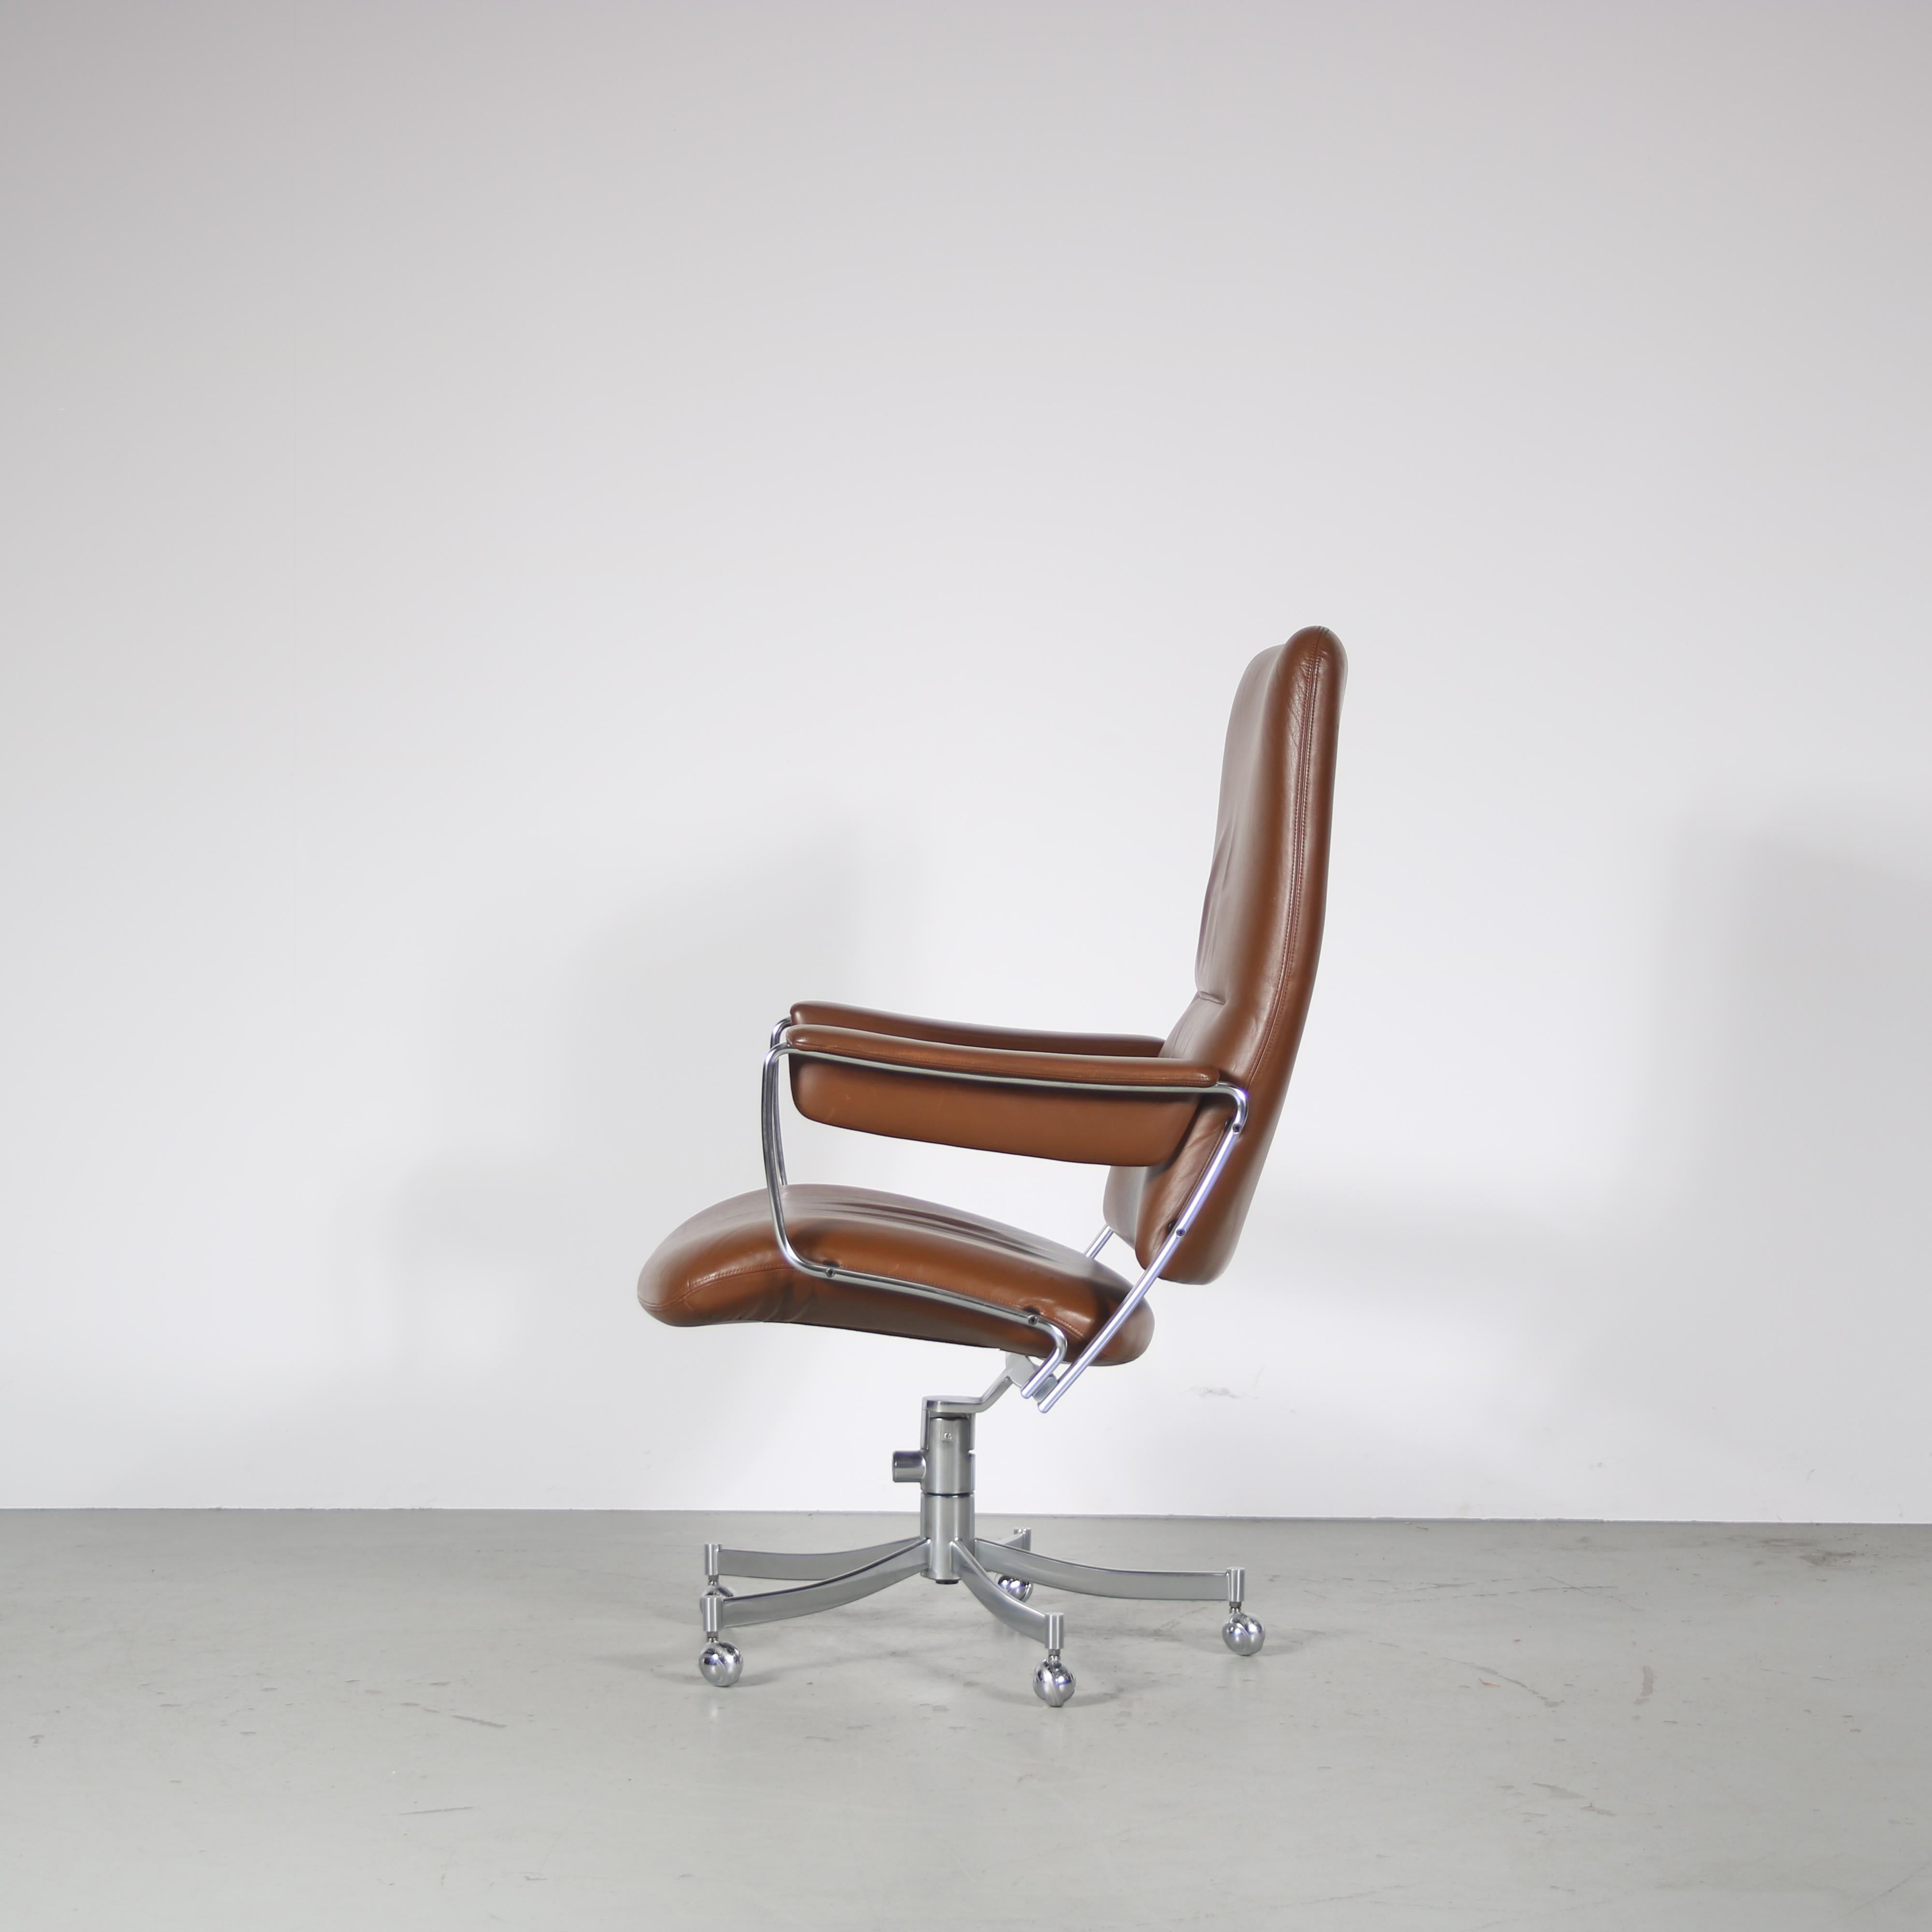 Late 20th Century Jorgen Kastholm “JK760” Desk Chair for Kill International, Germany 1970